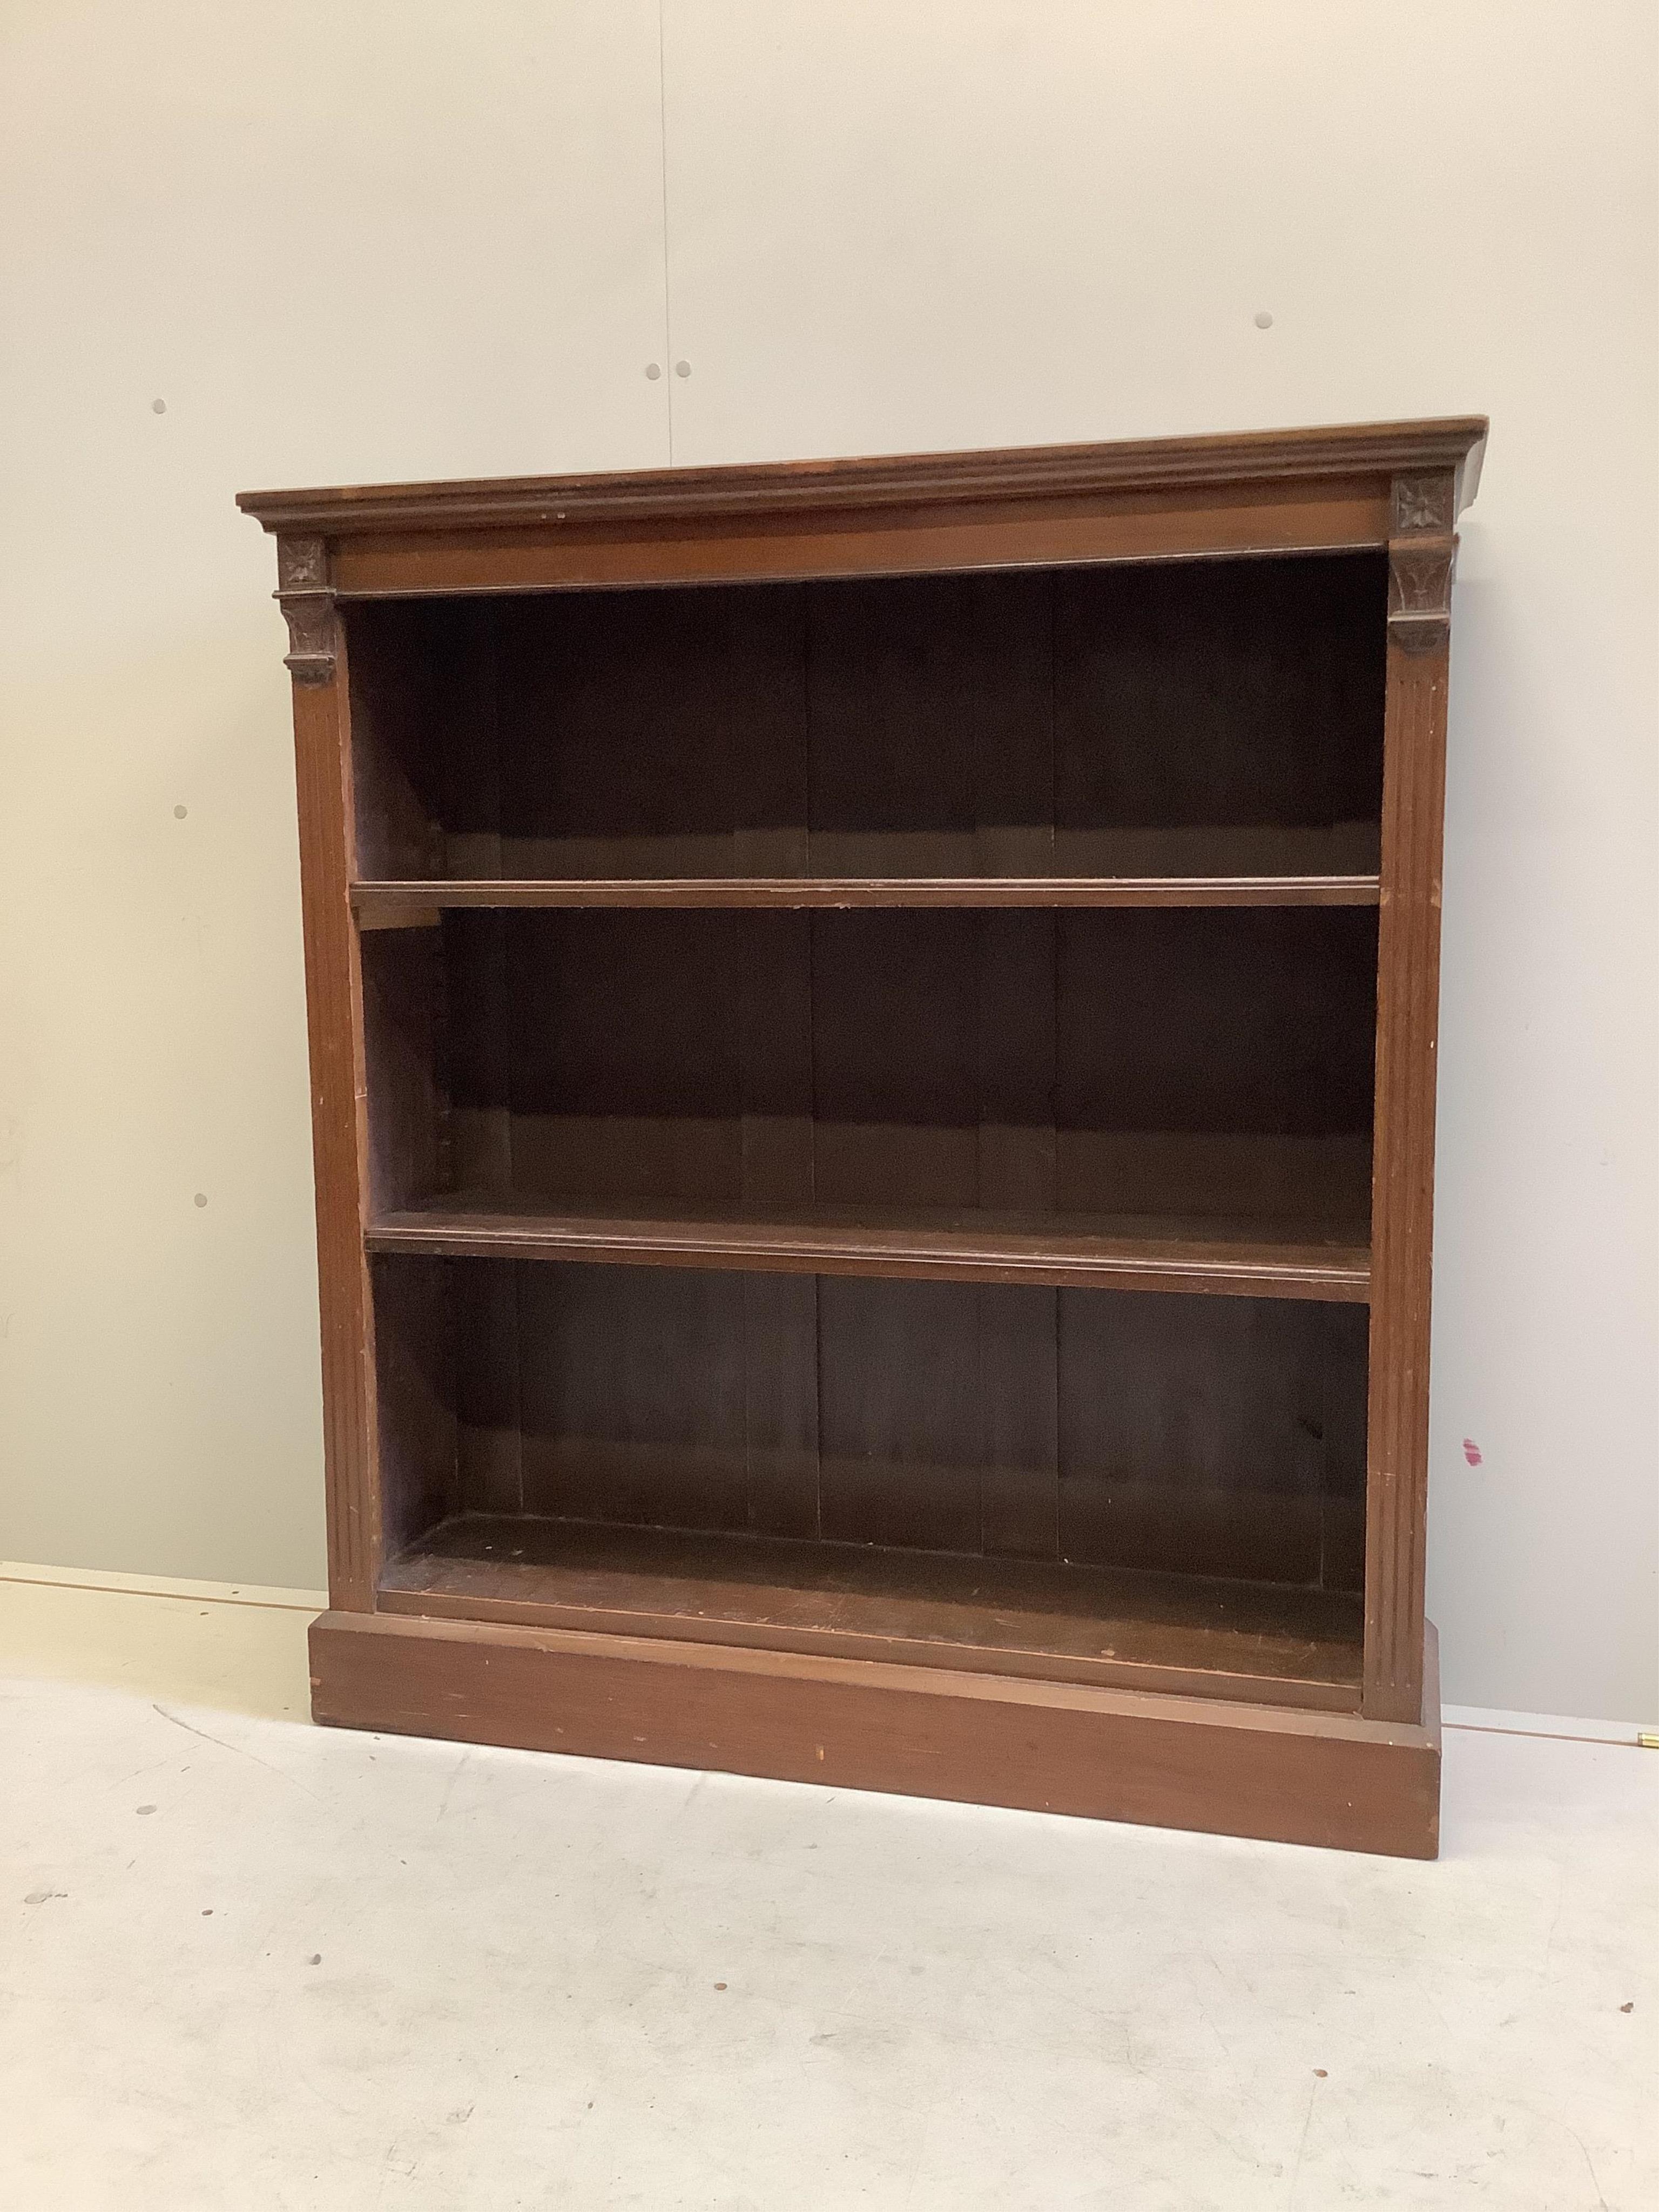 A late Victorian mahogany open bookcase, width 107cm, depth 30cm, height 117cm. Condition - fair